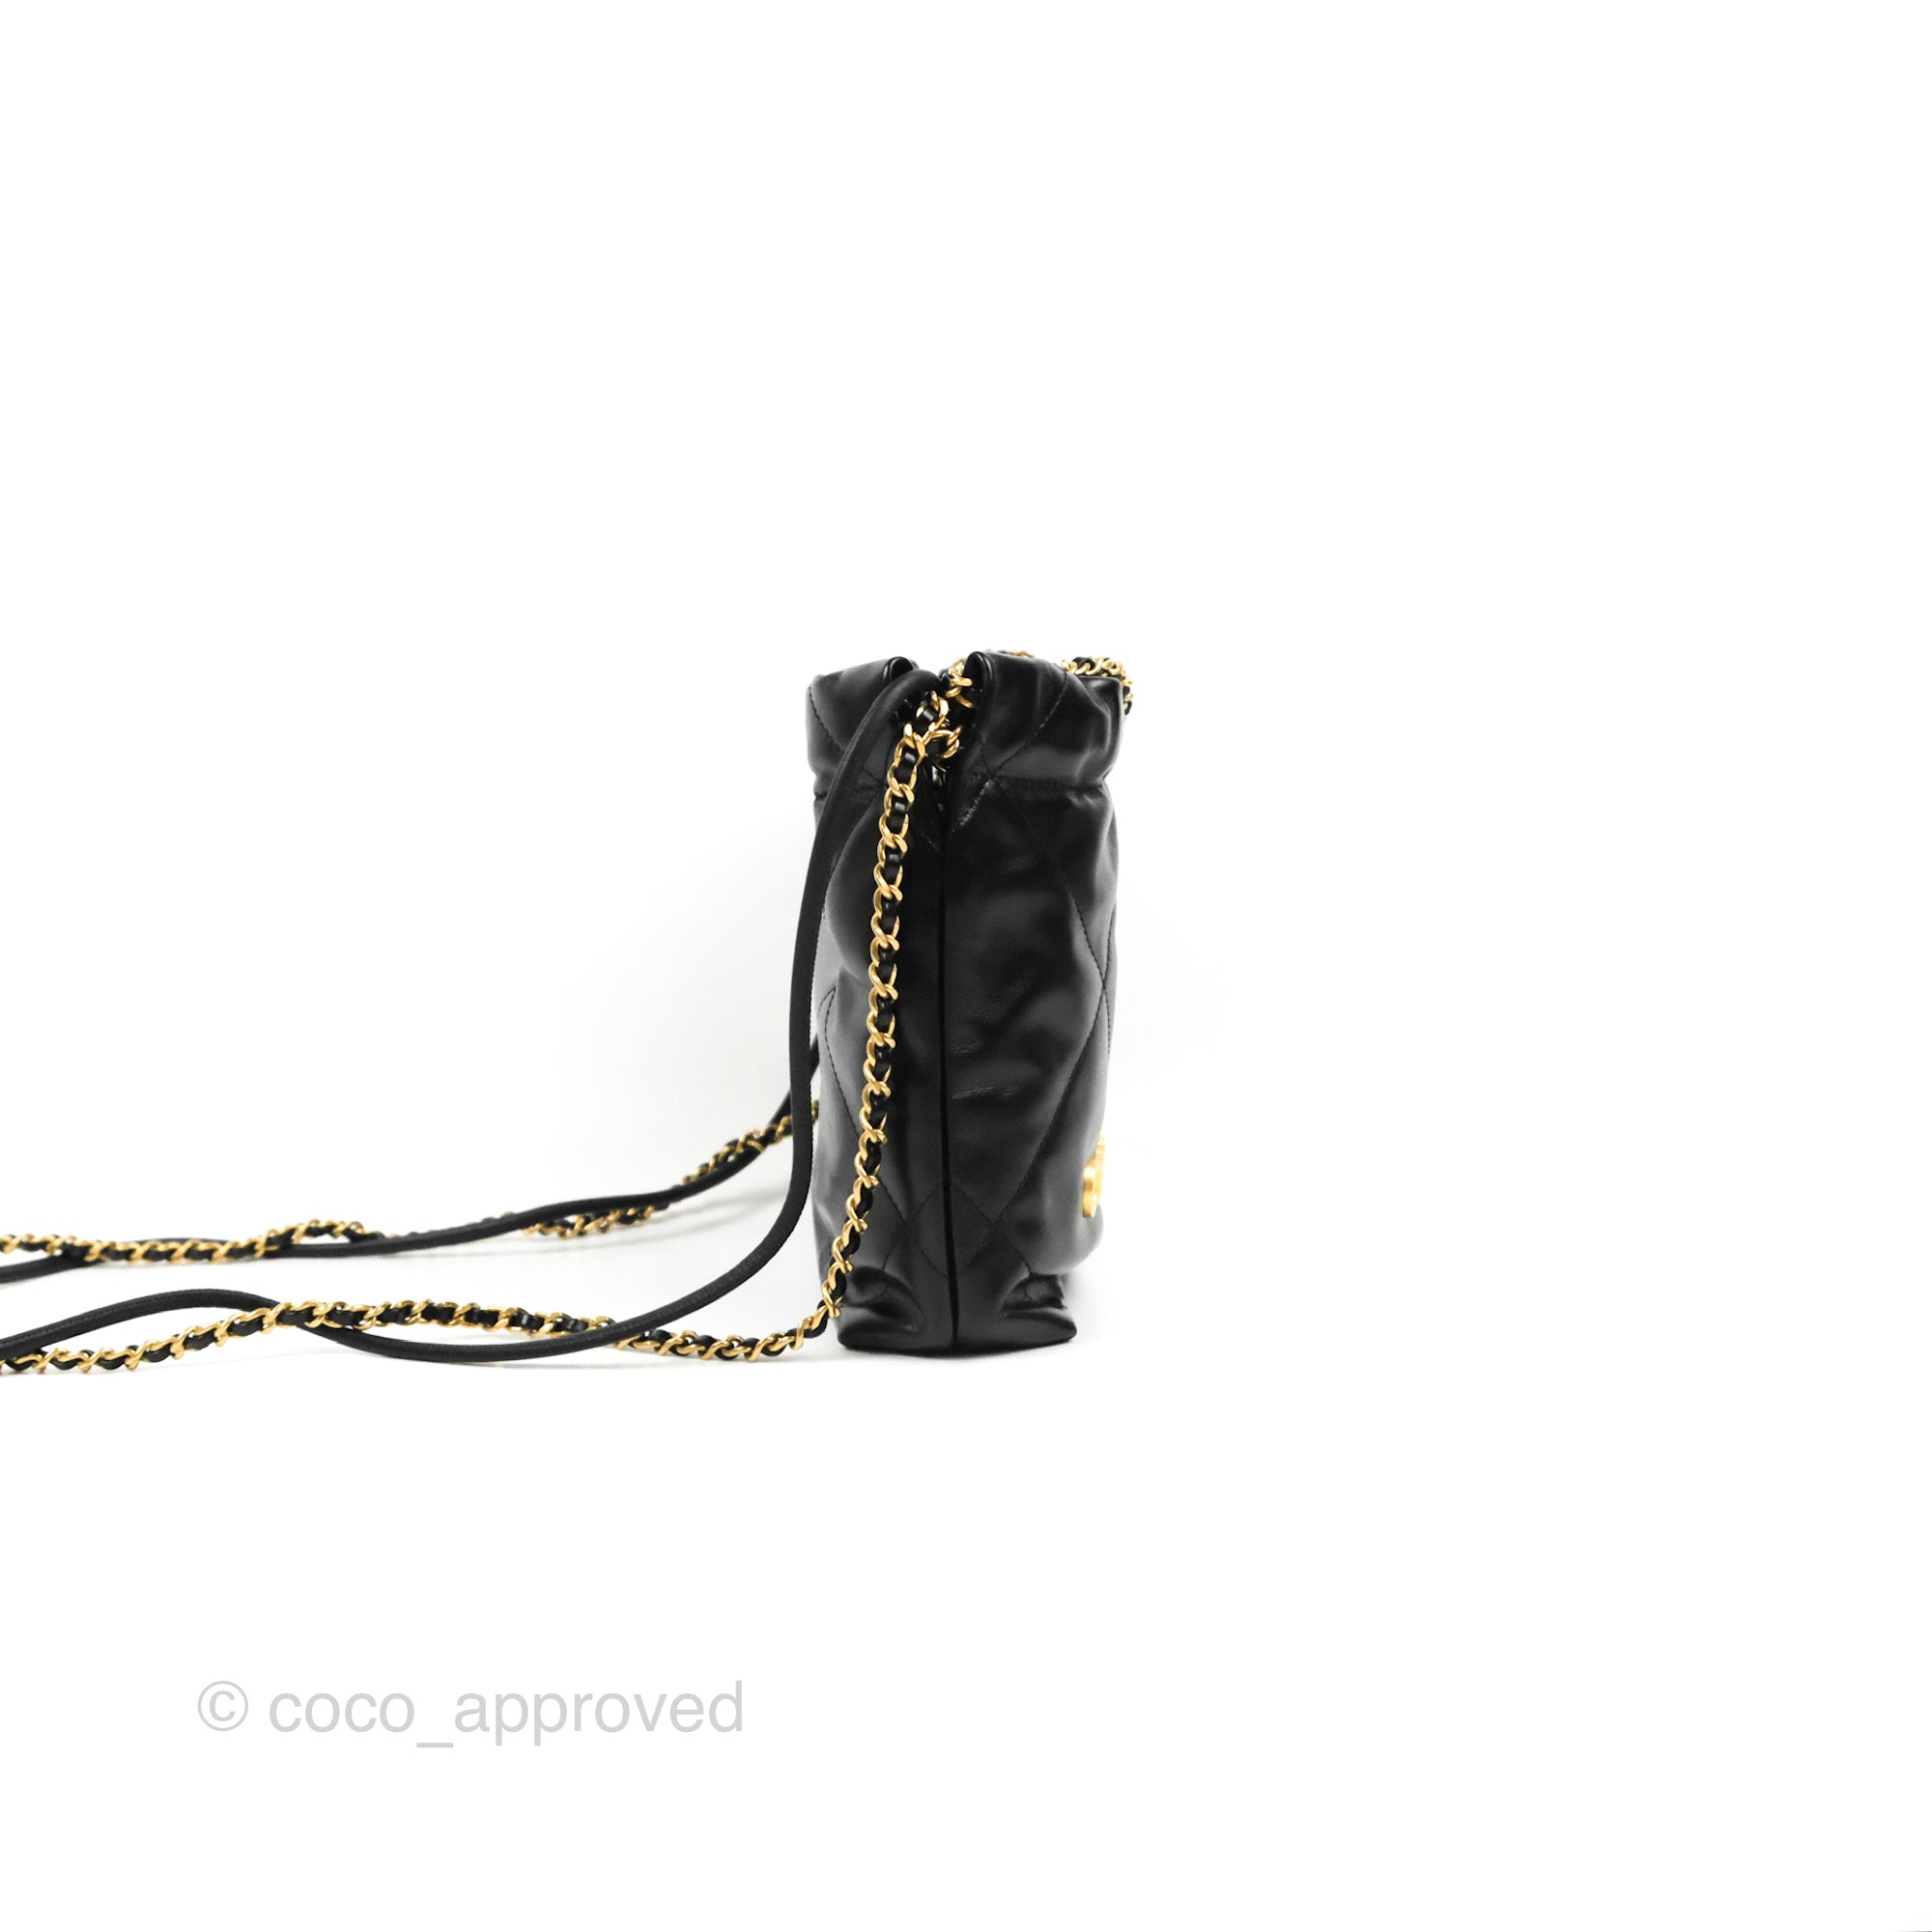 Chanel 22 Mini Bag with Pearl Chain Black Shiny Crumpled Calfskin